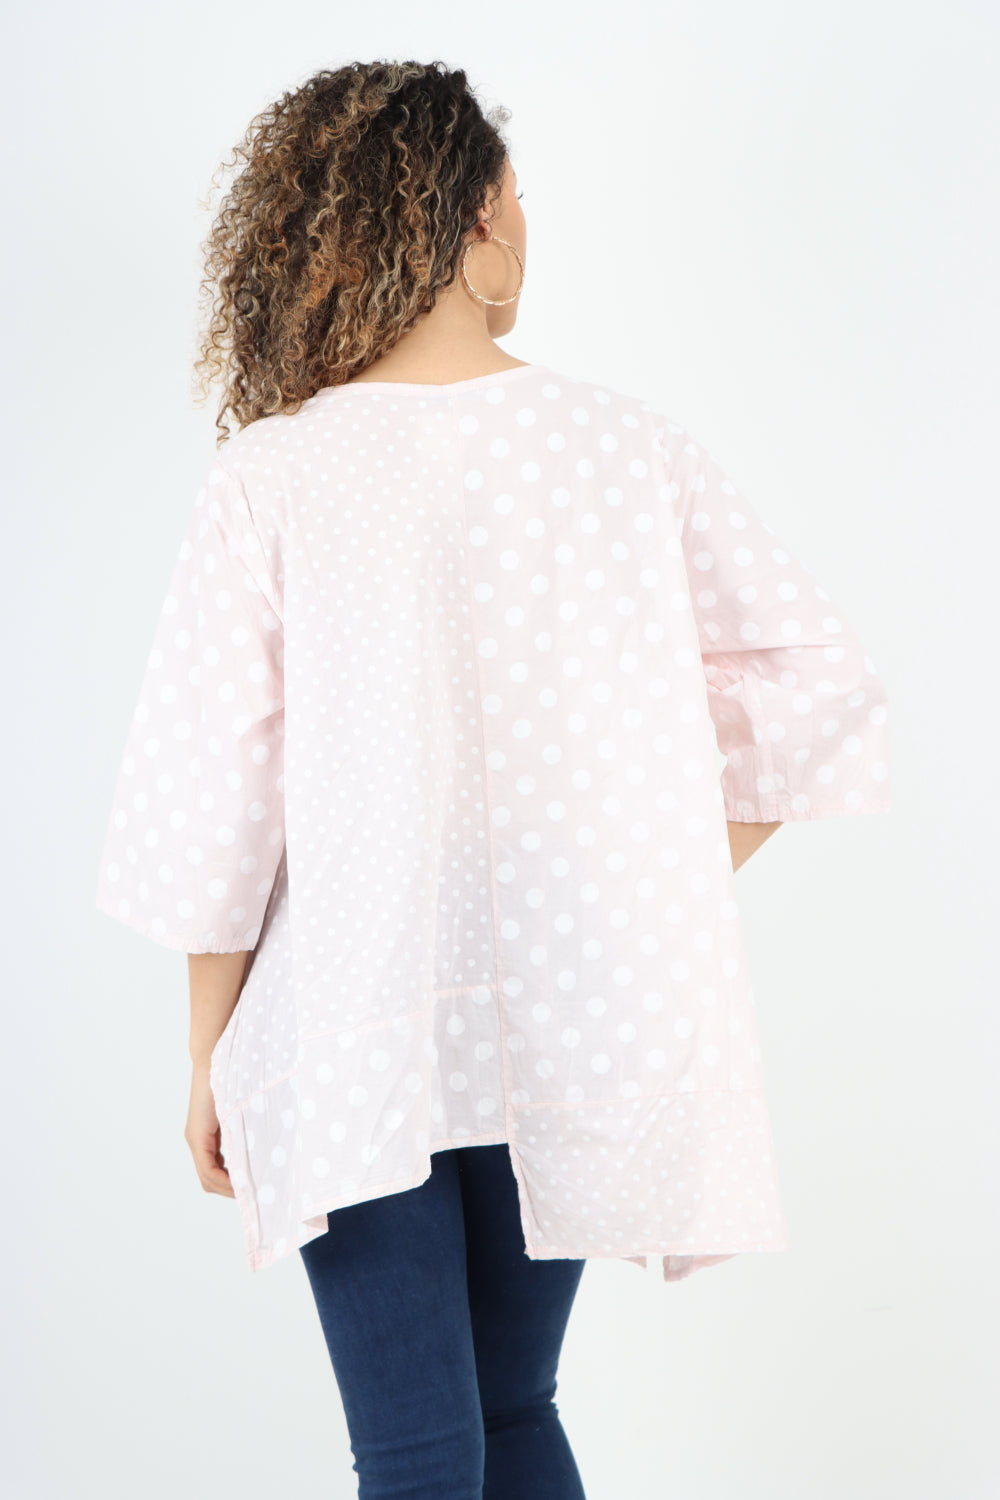 Italian Polka Dot Print Asymmetric Cotton Tunic Top